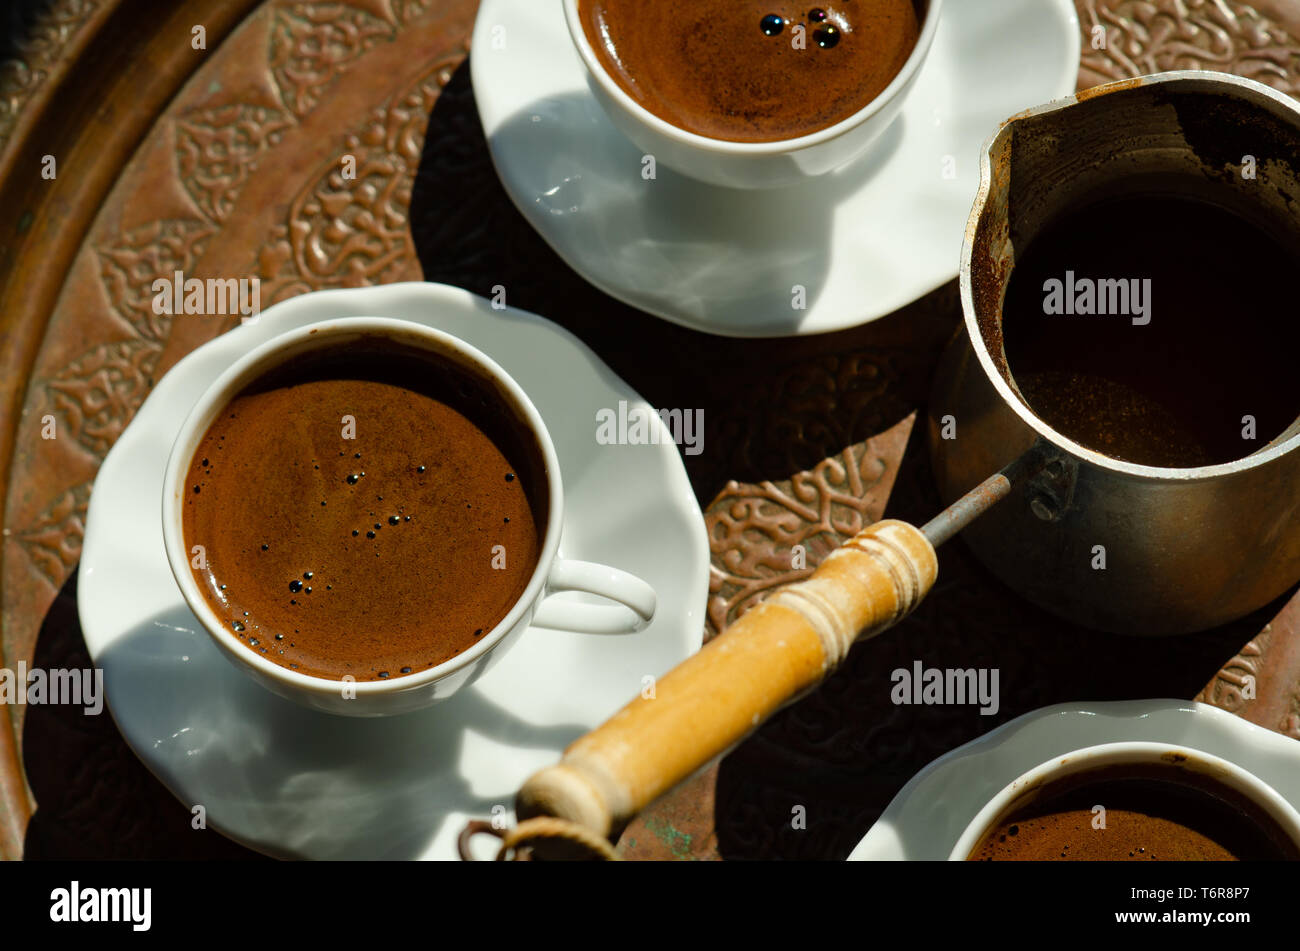 Bandeja tradicionales de café de estilo árabe o turco Foto de stock